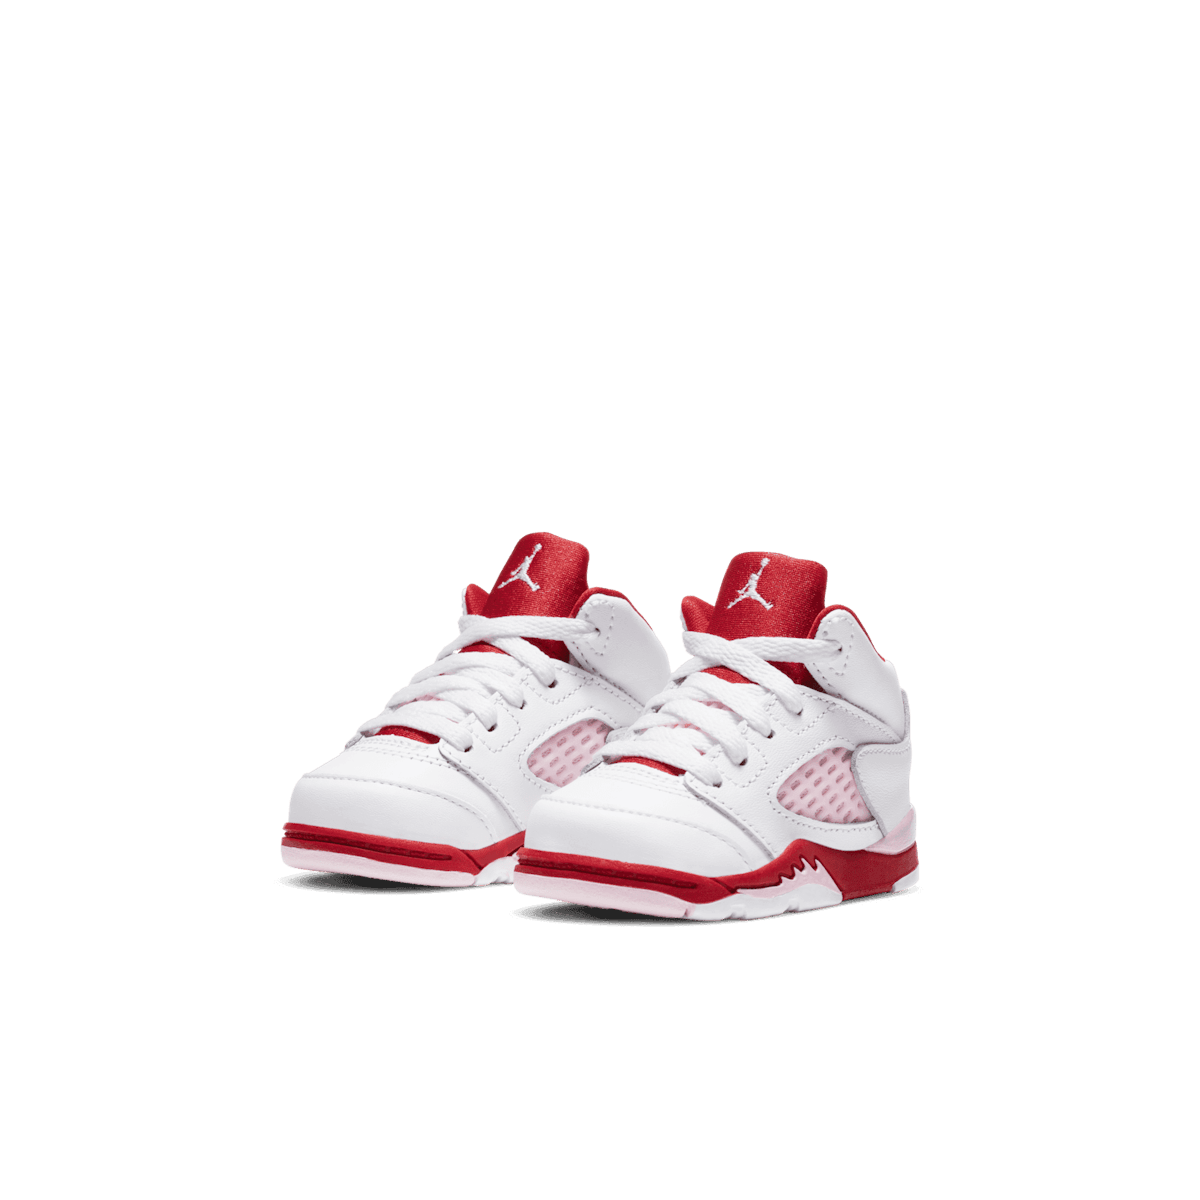 Air Jordan 5 Retro White Pink Red (TD) Angle 2